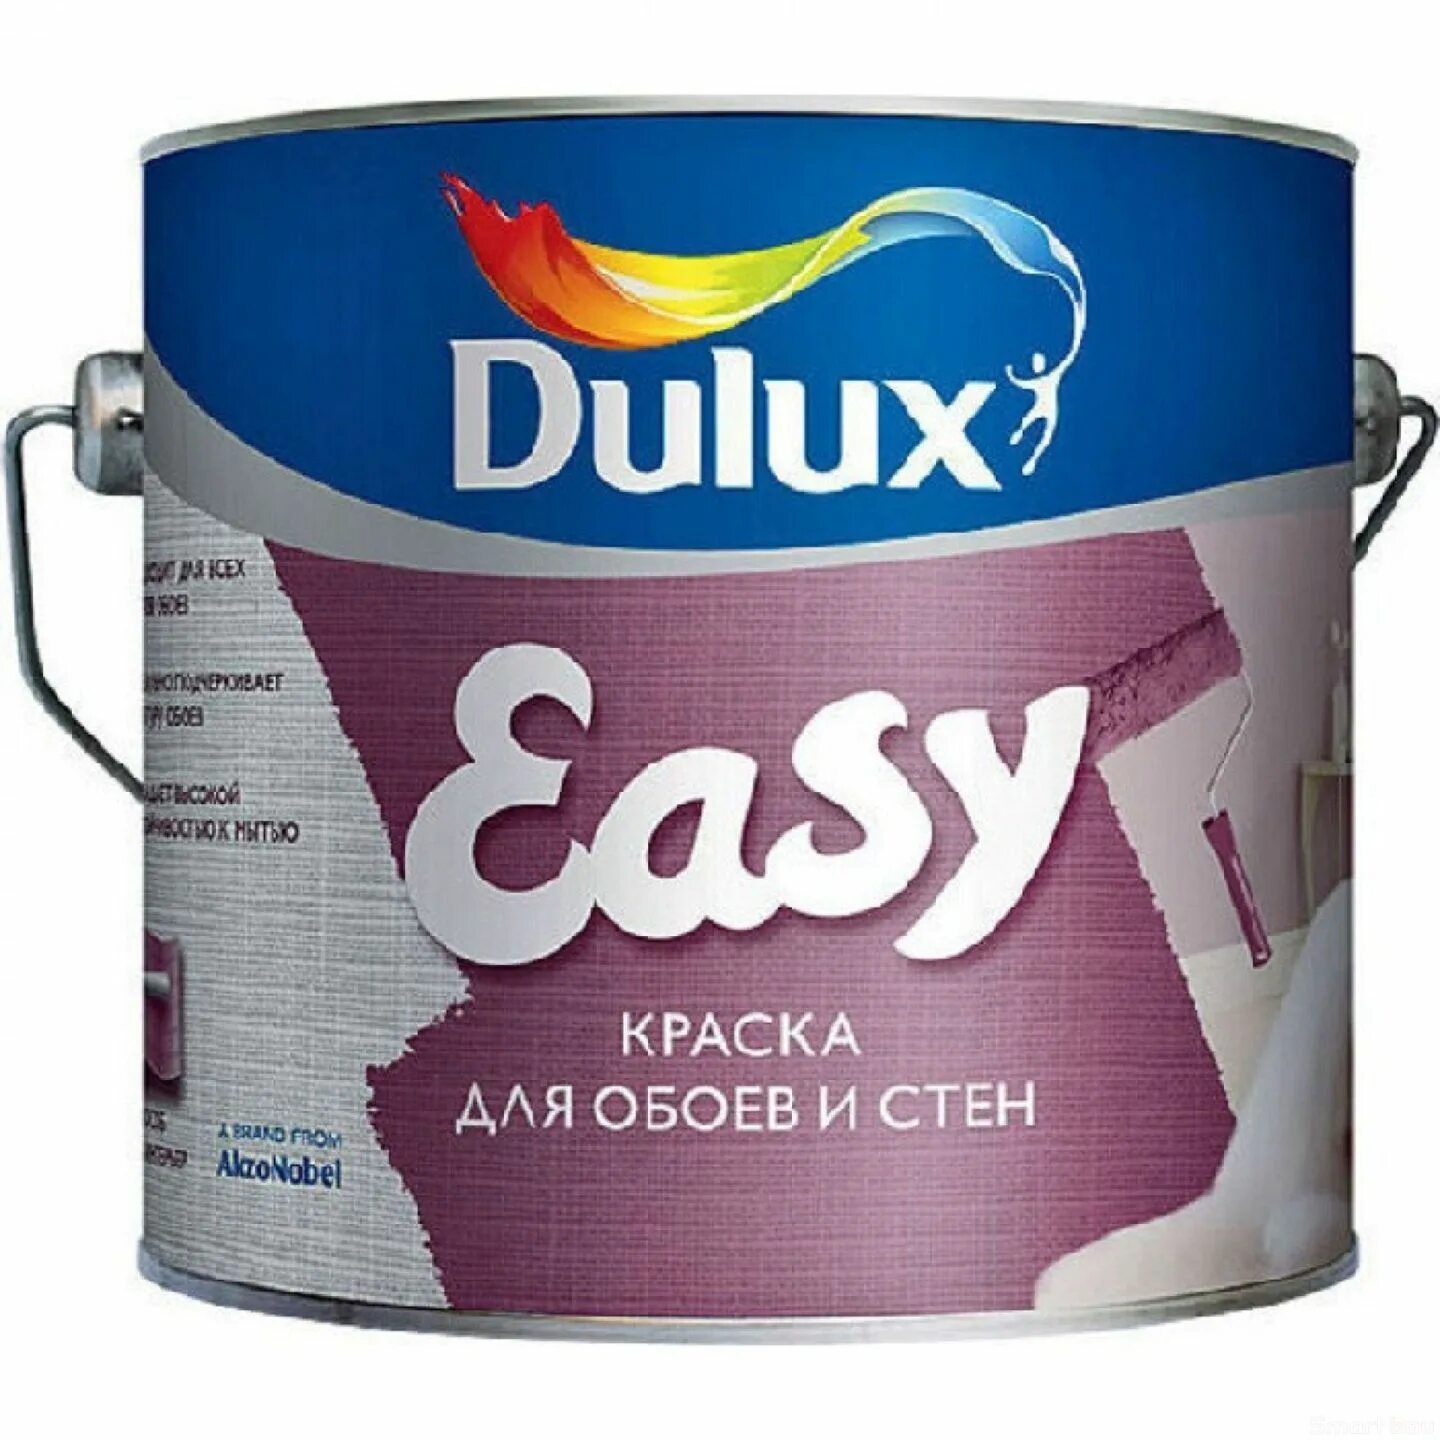 Краска easy. Краска ВД Bindo easy краска для обоев и стен 2,5л. Краска Dulux easy. Краска Dulux для стен моющаяся. Краска акриловая Dulux.